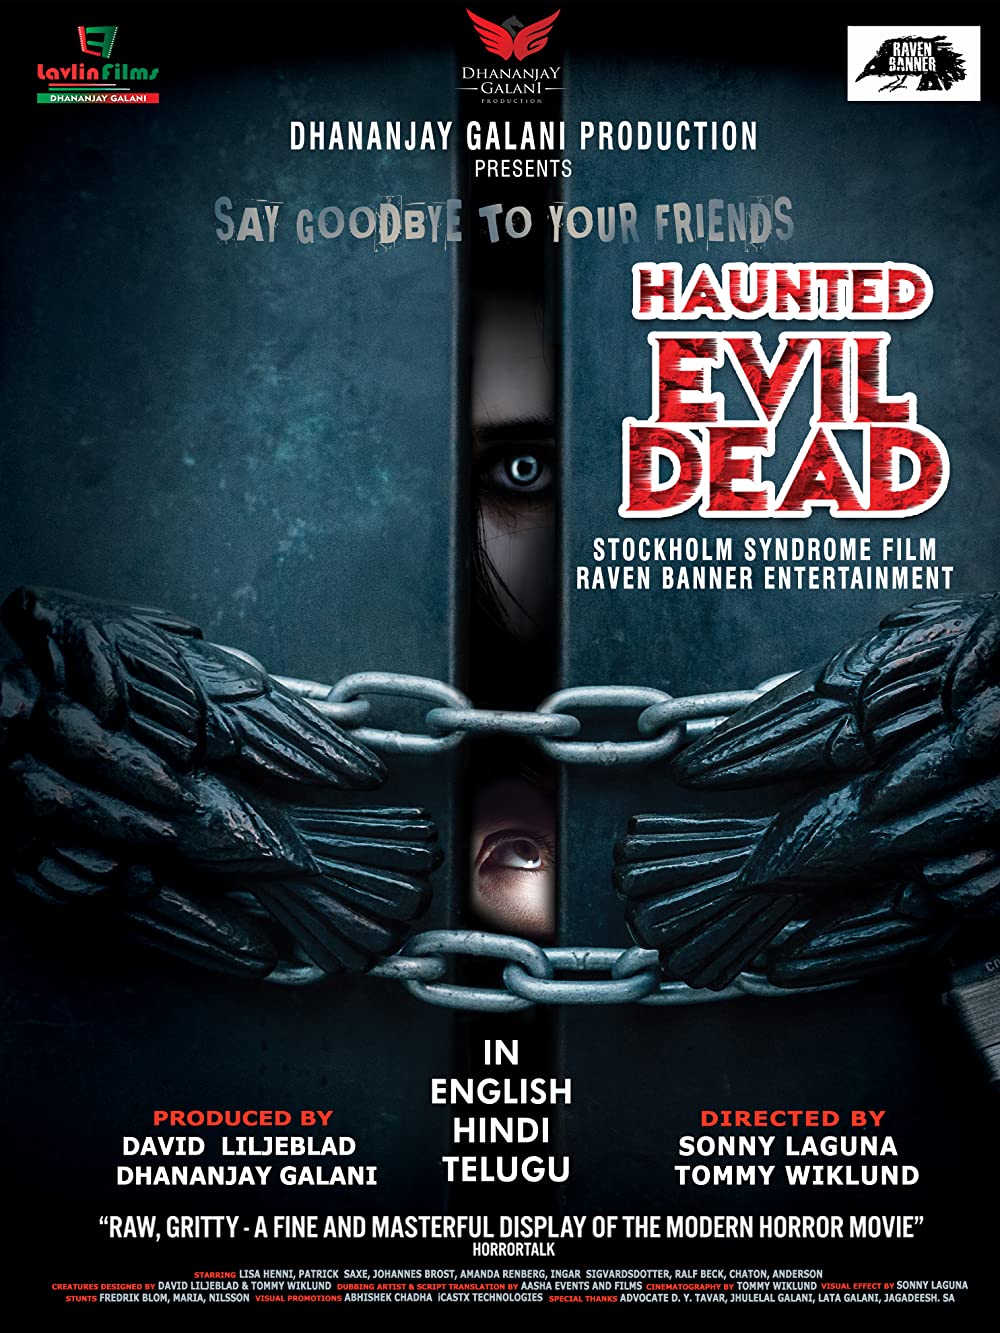 Haunted Evil Dead (2021) Hindi Dubbed ORG 1080p HDRip x264 1.8GB Download